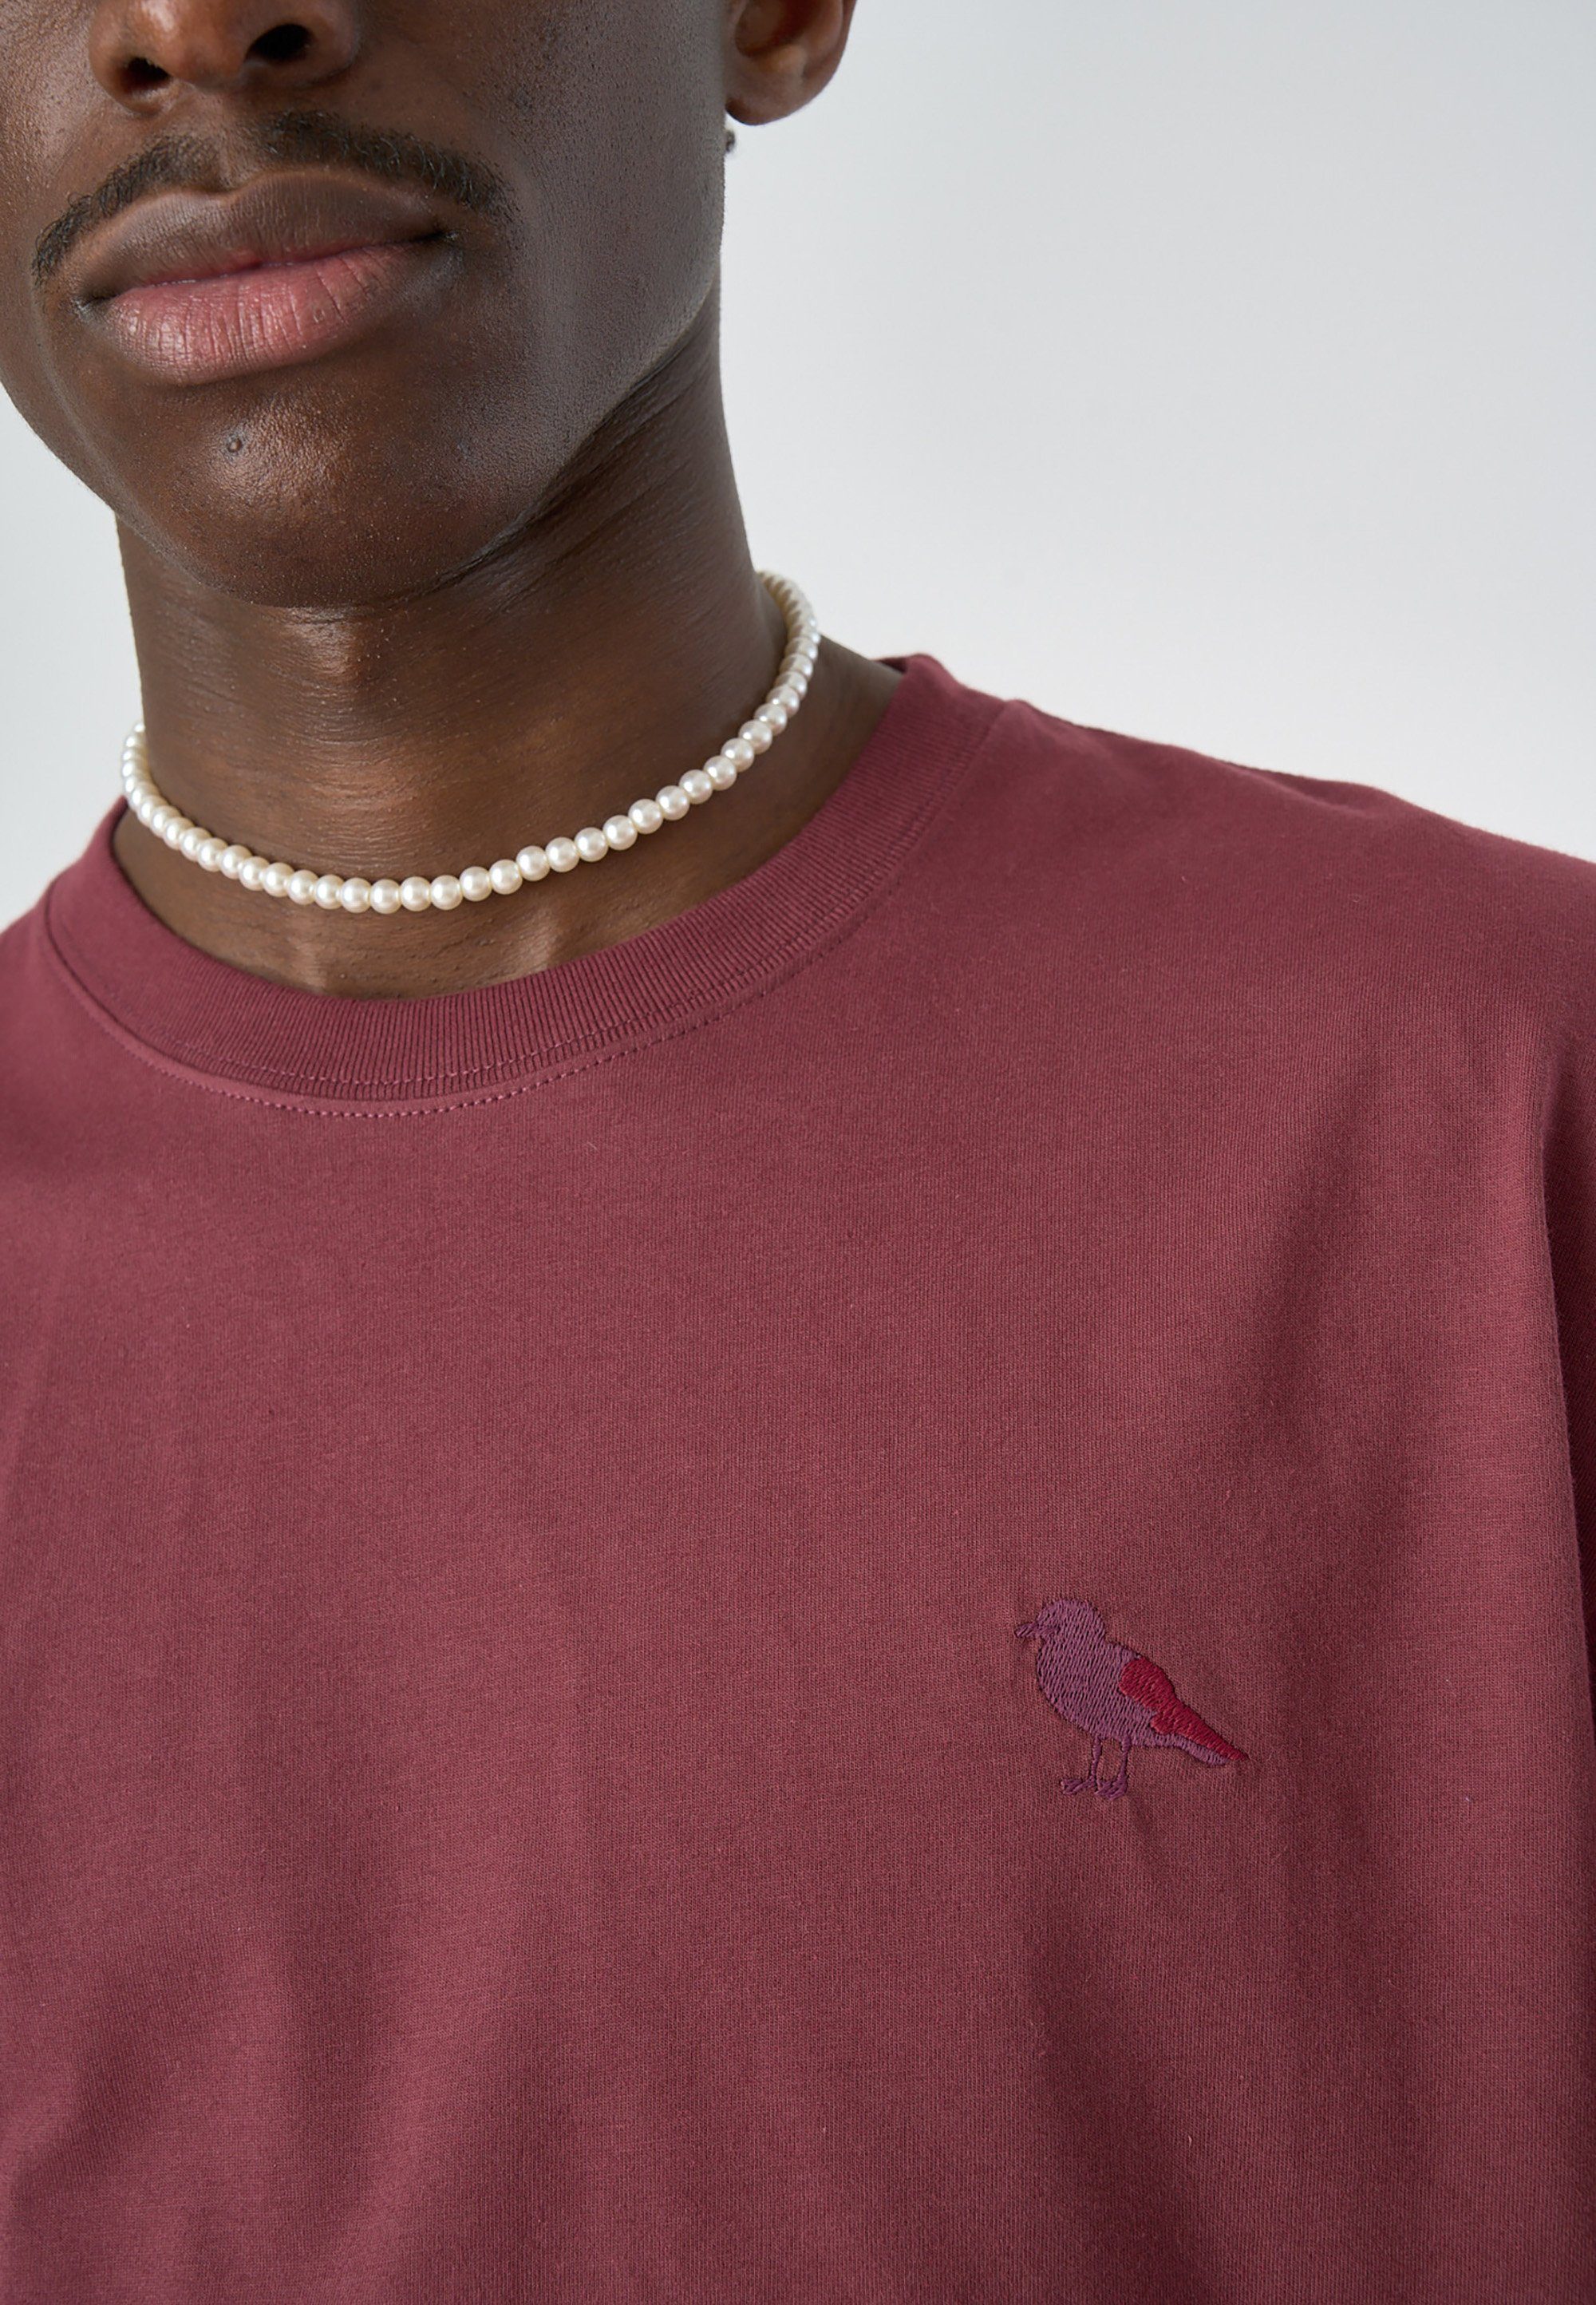 hellgrün mit Mono Gull T-Shirt Embroidery Schnitt Cleptomanicx lockerem